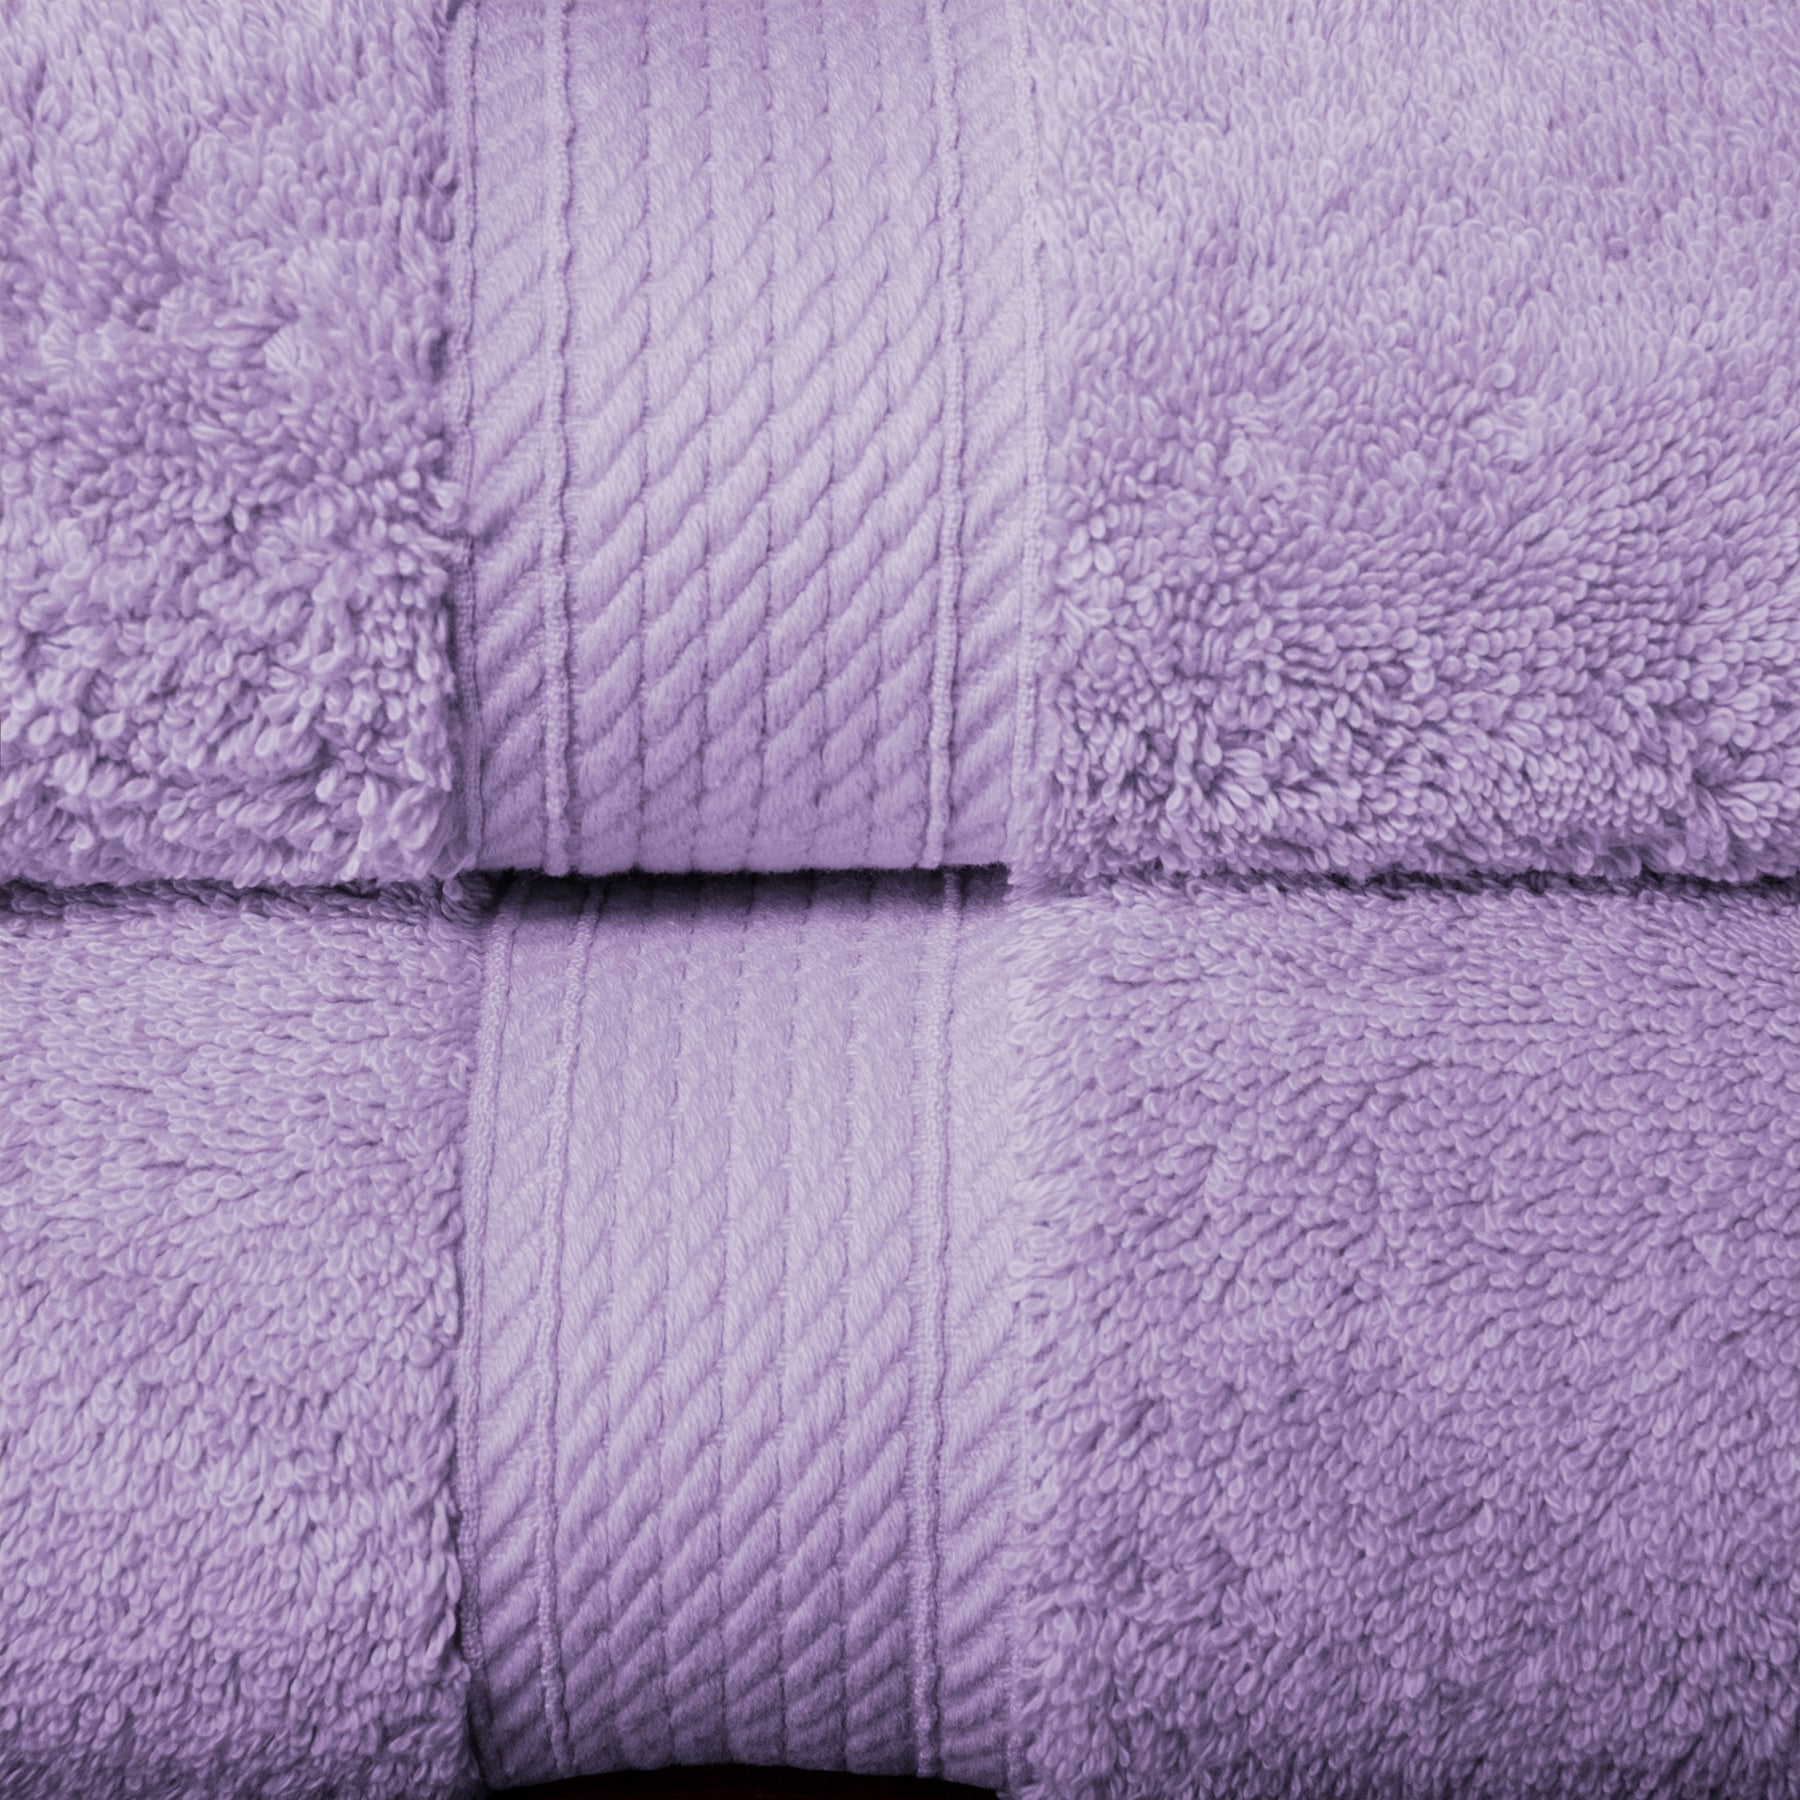 Egyptian Cotton Heavyweight 10 Piece Bath Towel Set - Purple